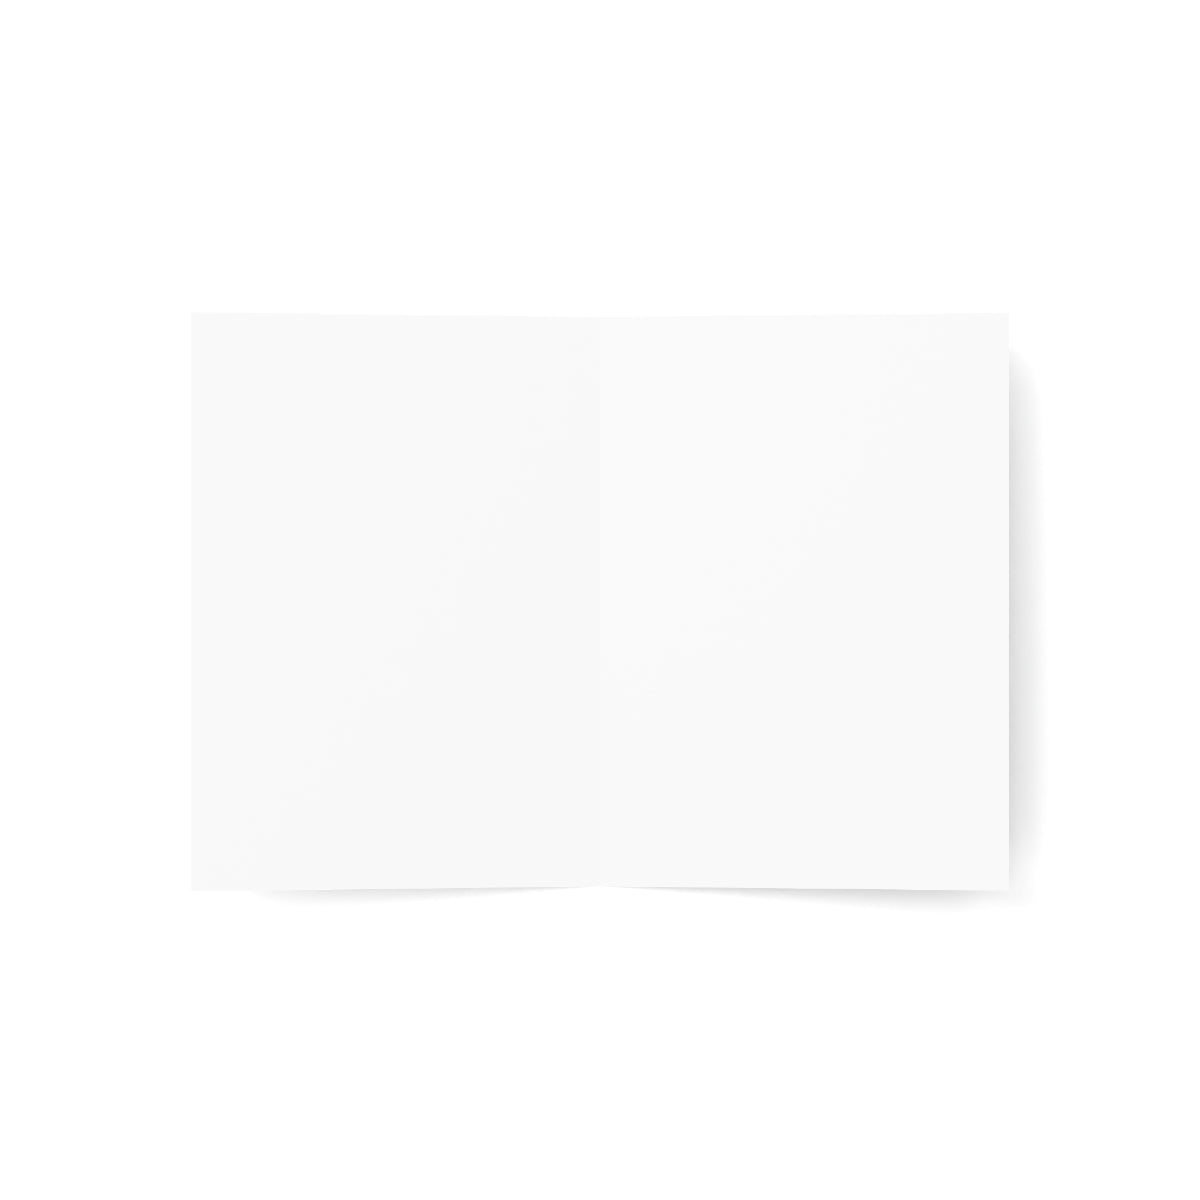 Niagara Falls Folded Matte Notecards + Envelopes (10pcs)